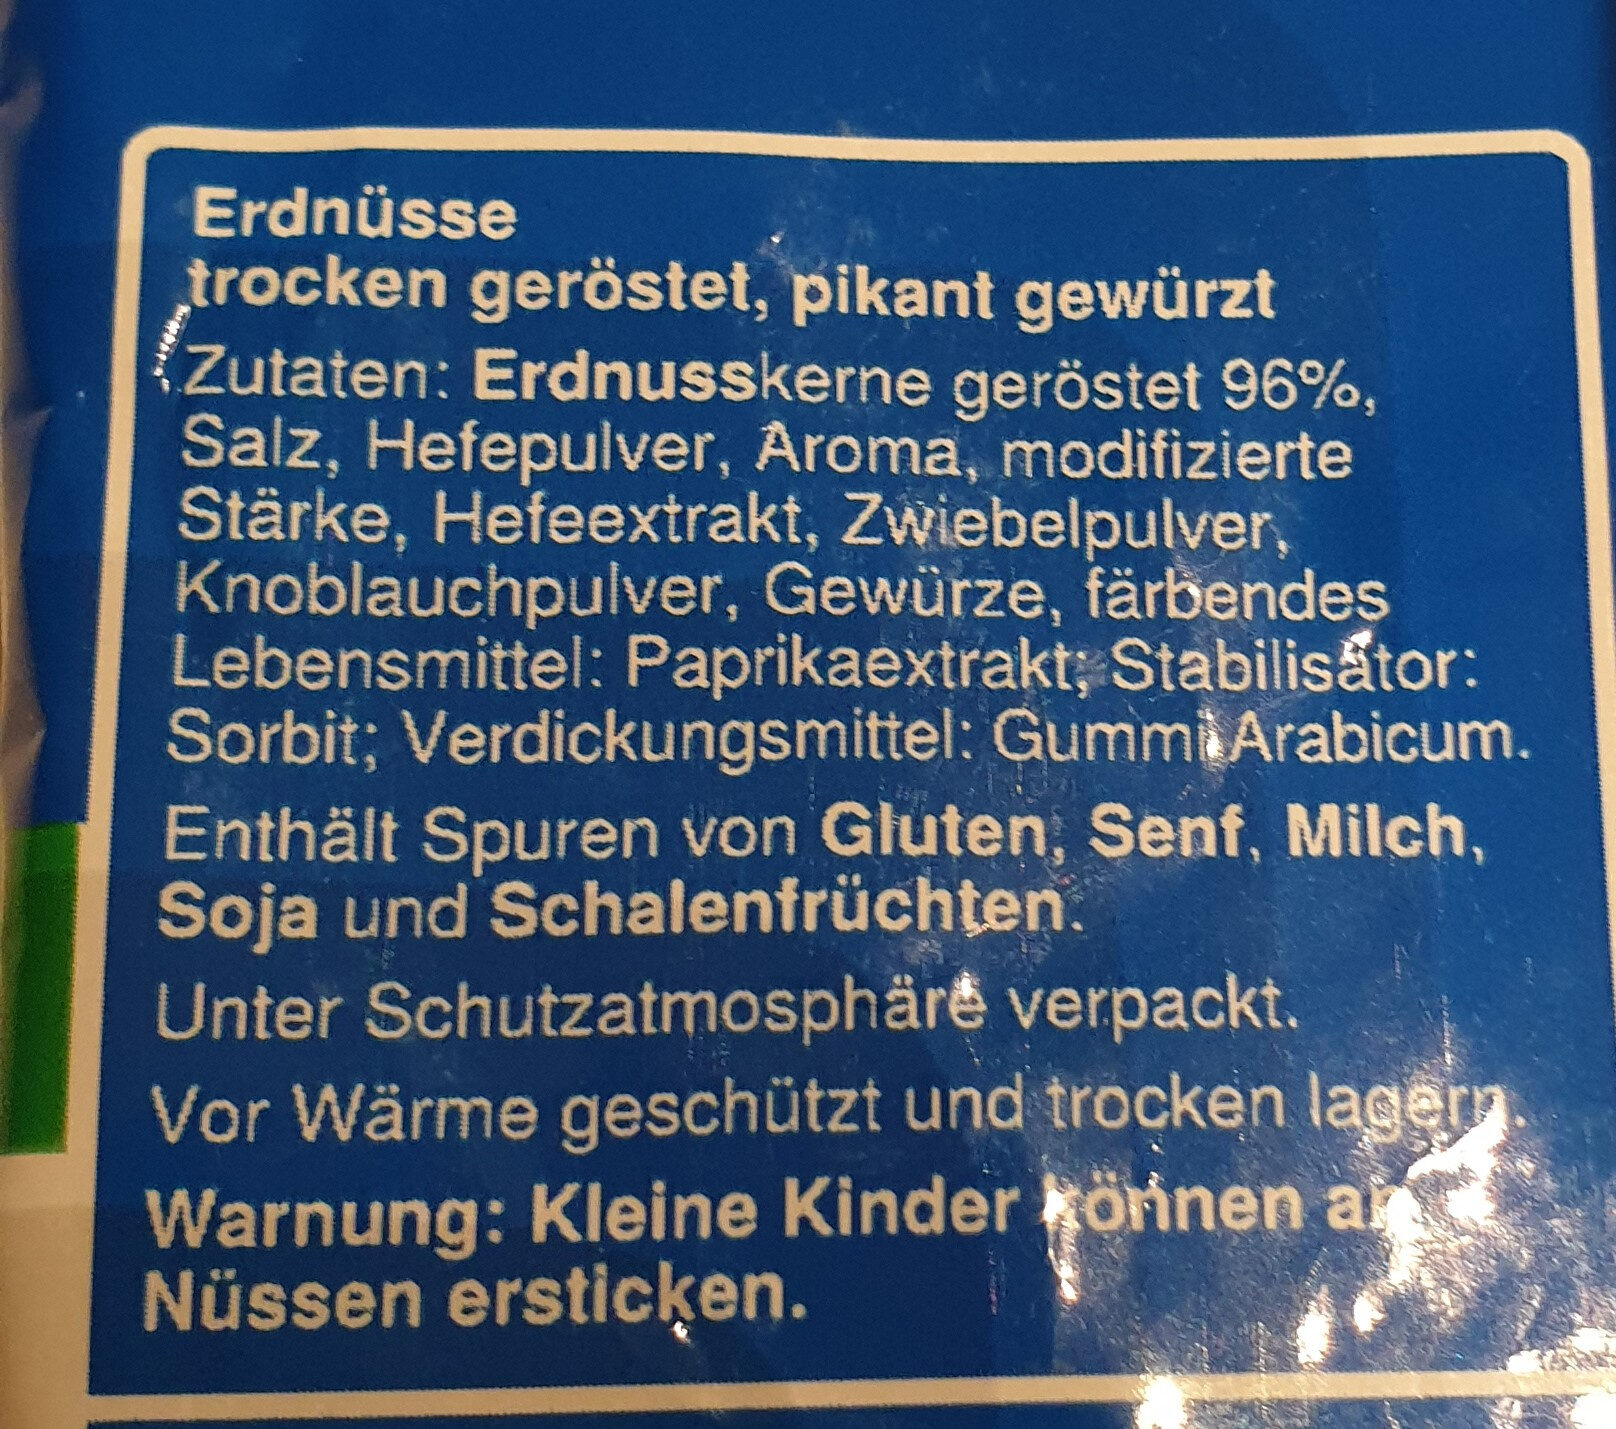 Erdnüsse würzig-pikant - Ingredients - de